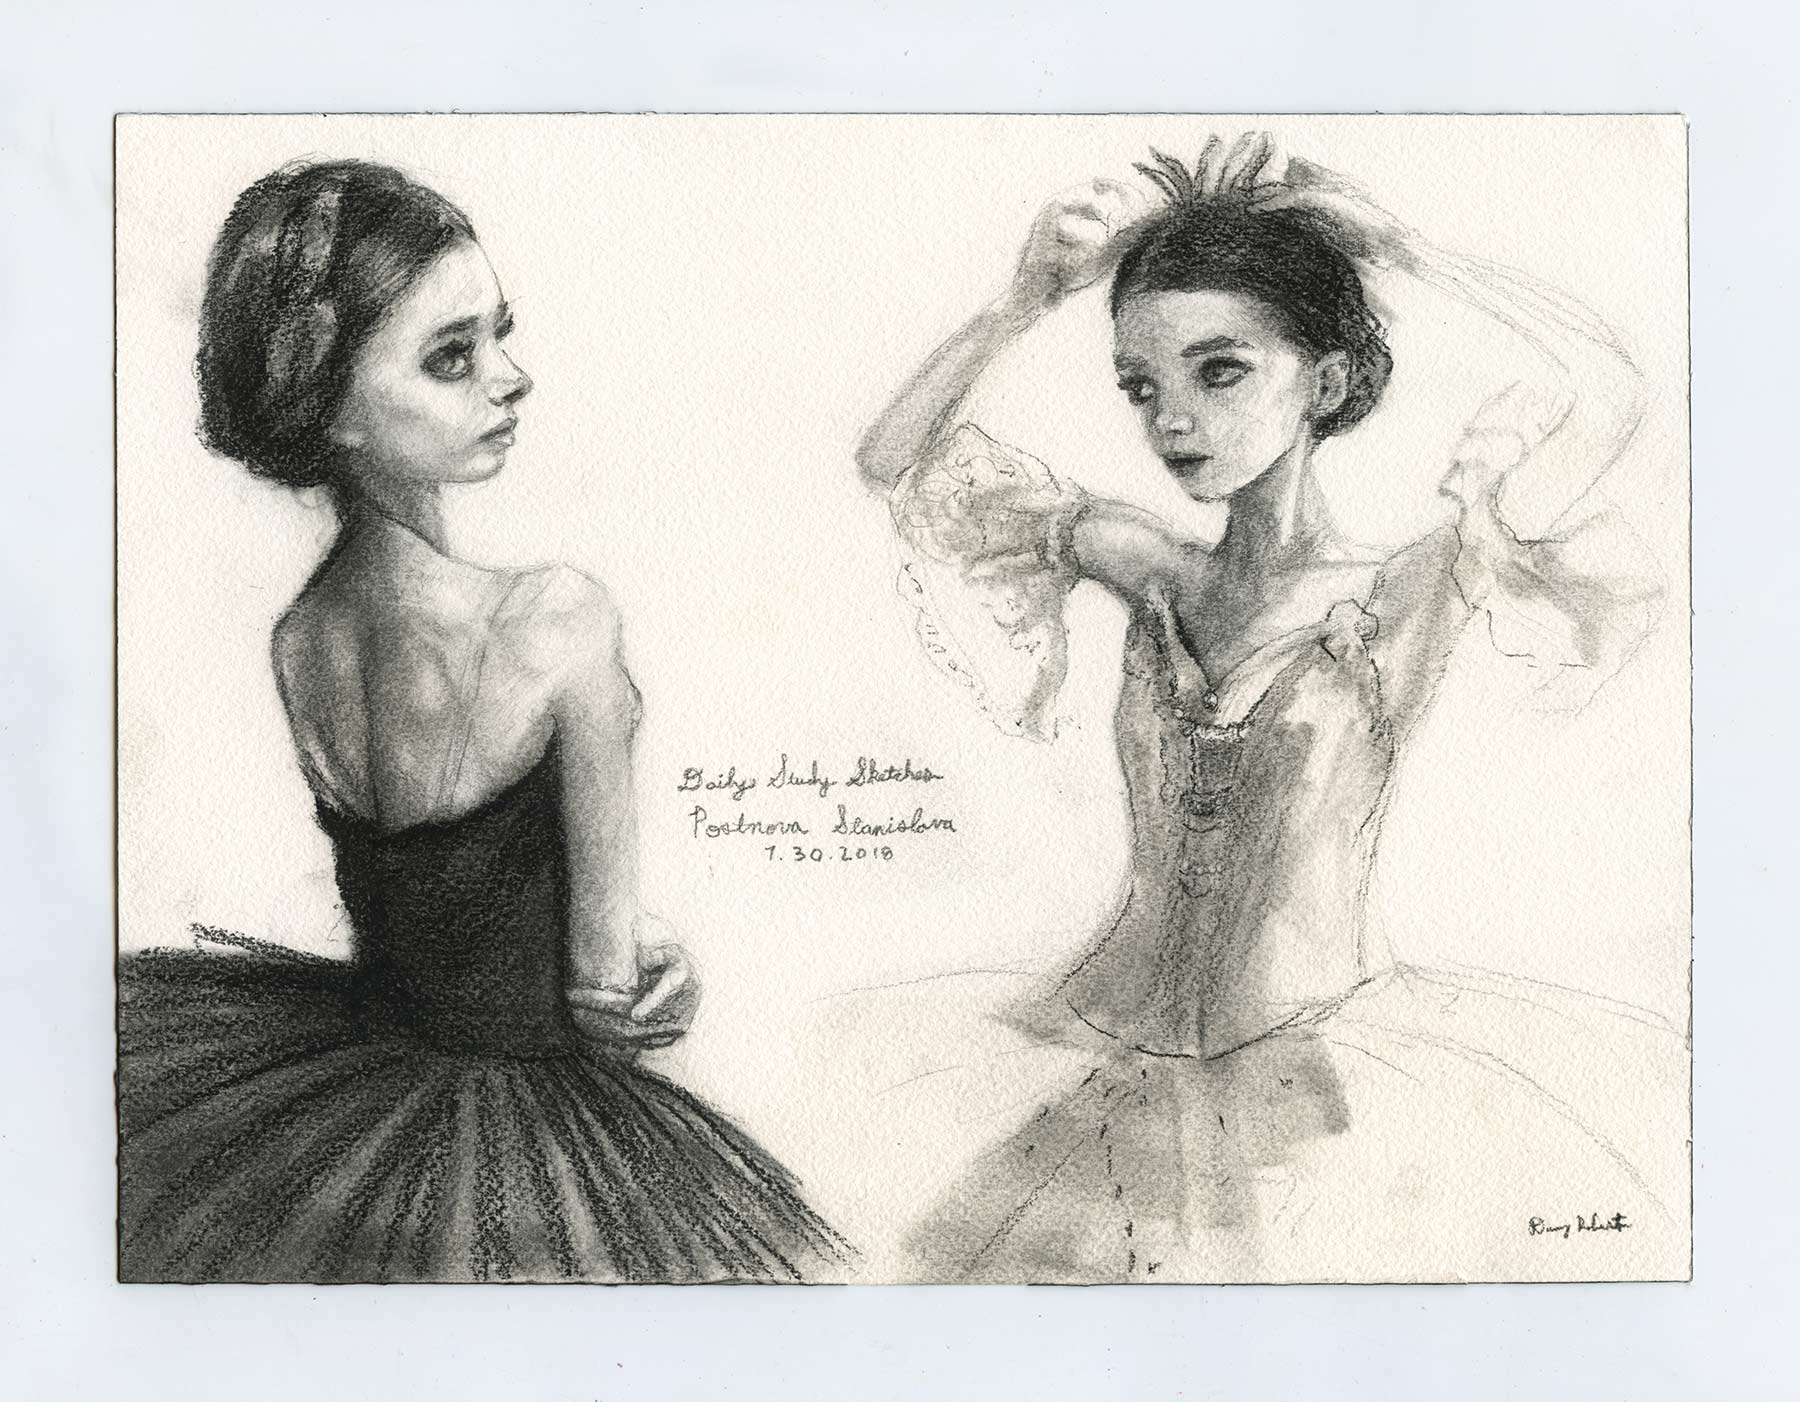 Sketch of Russian ballerina Postnova Stanislava rubytear by danny Roberts pencil and charcoal.